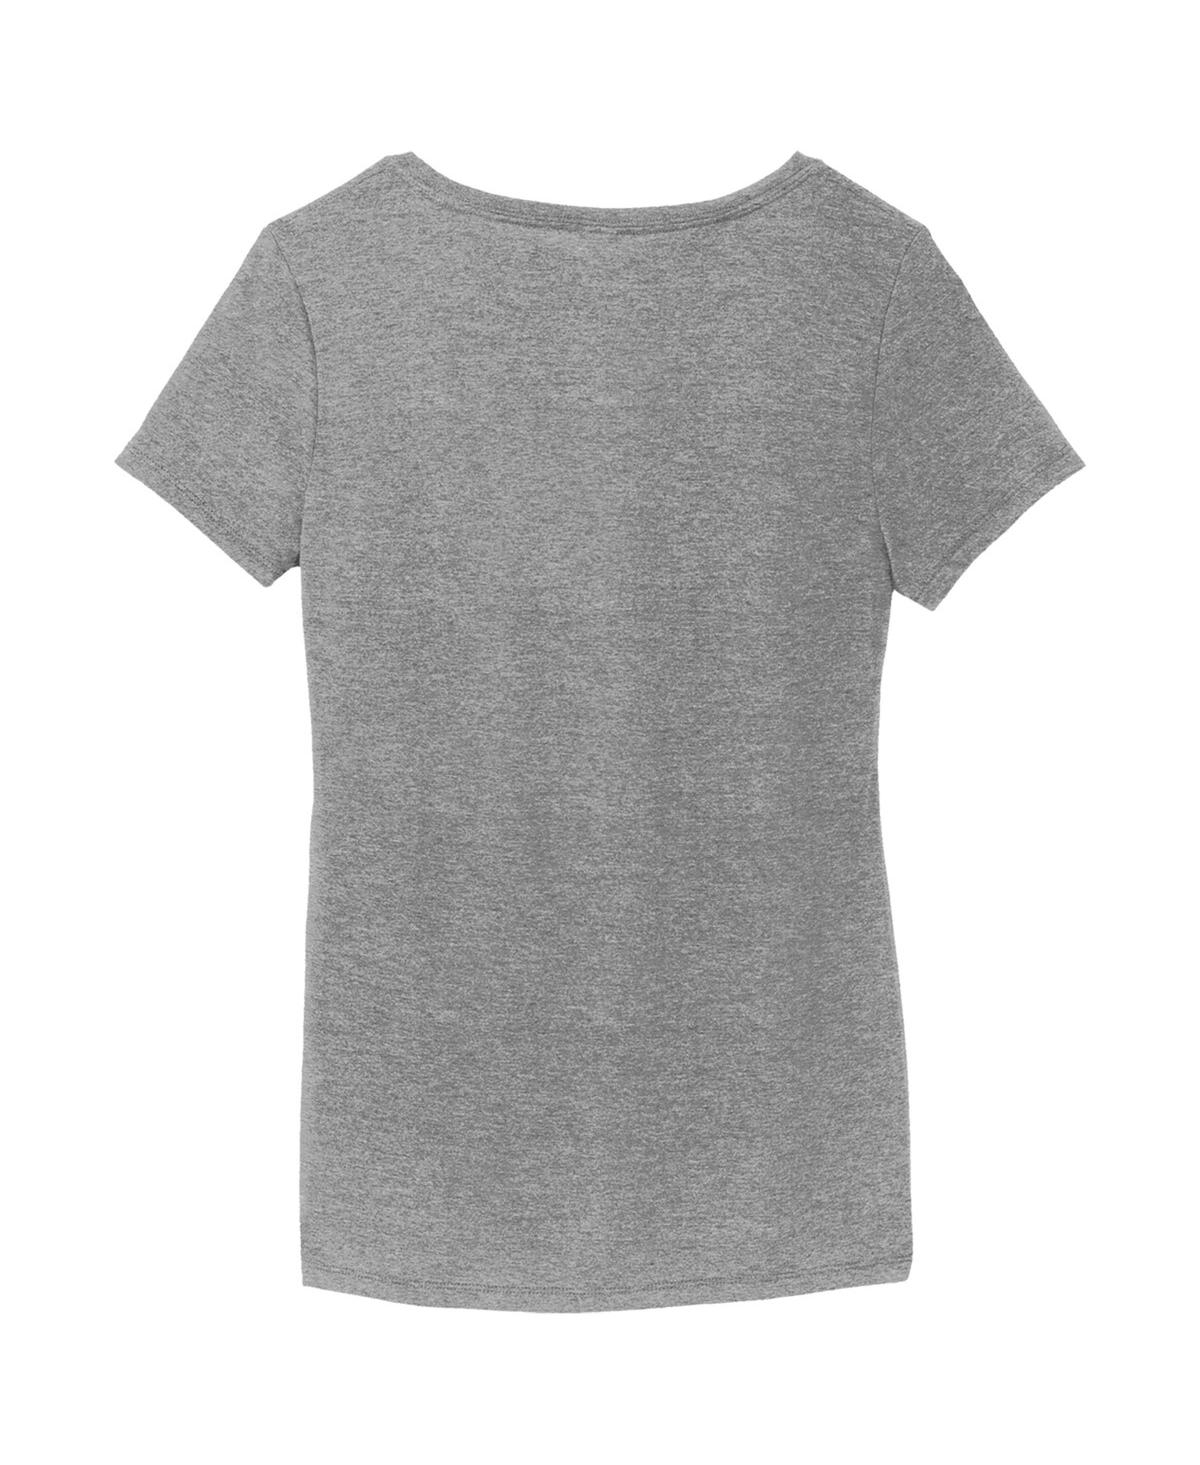 Shop 23xi Racing Women's  Gray Tyler Reddick Tri-blend V-neck T-shirt